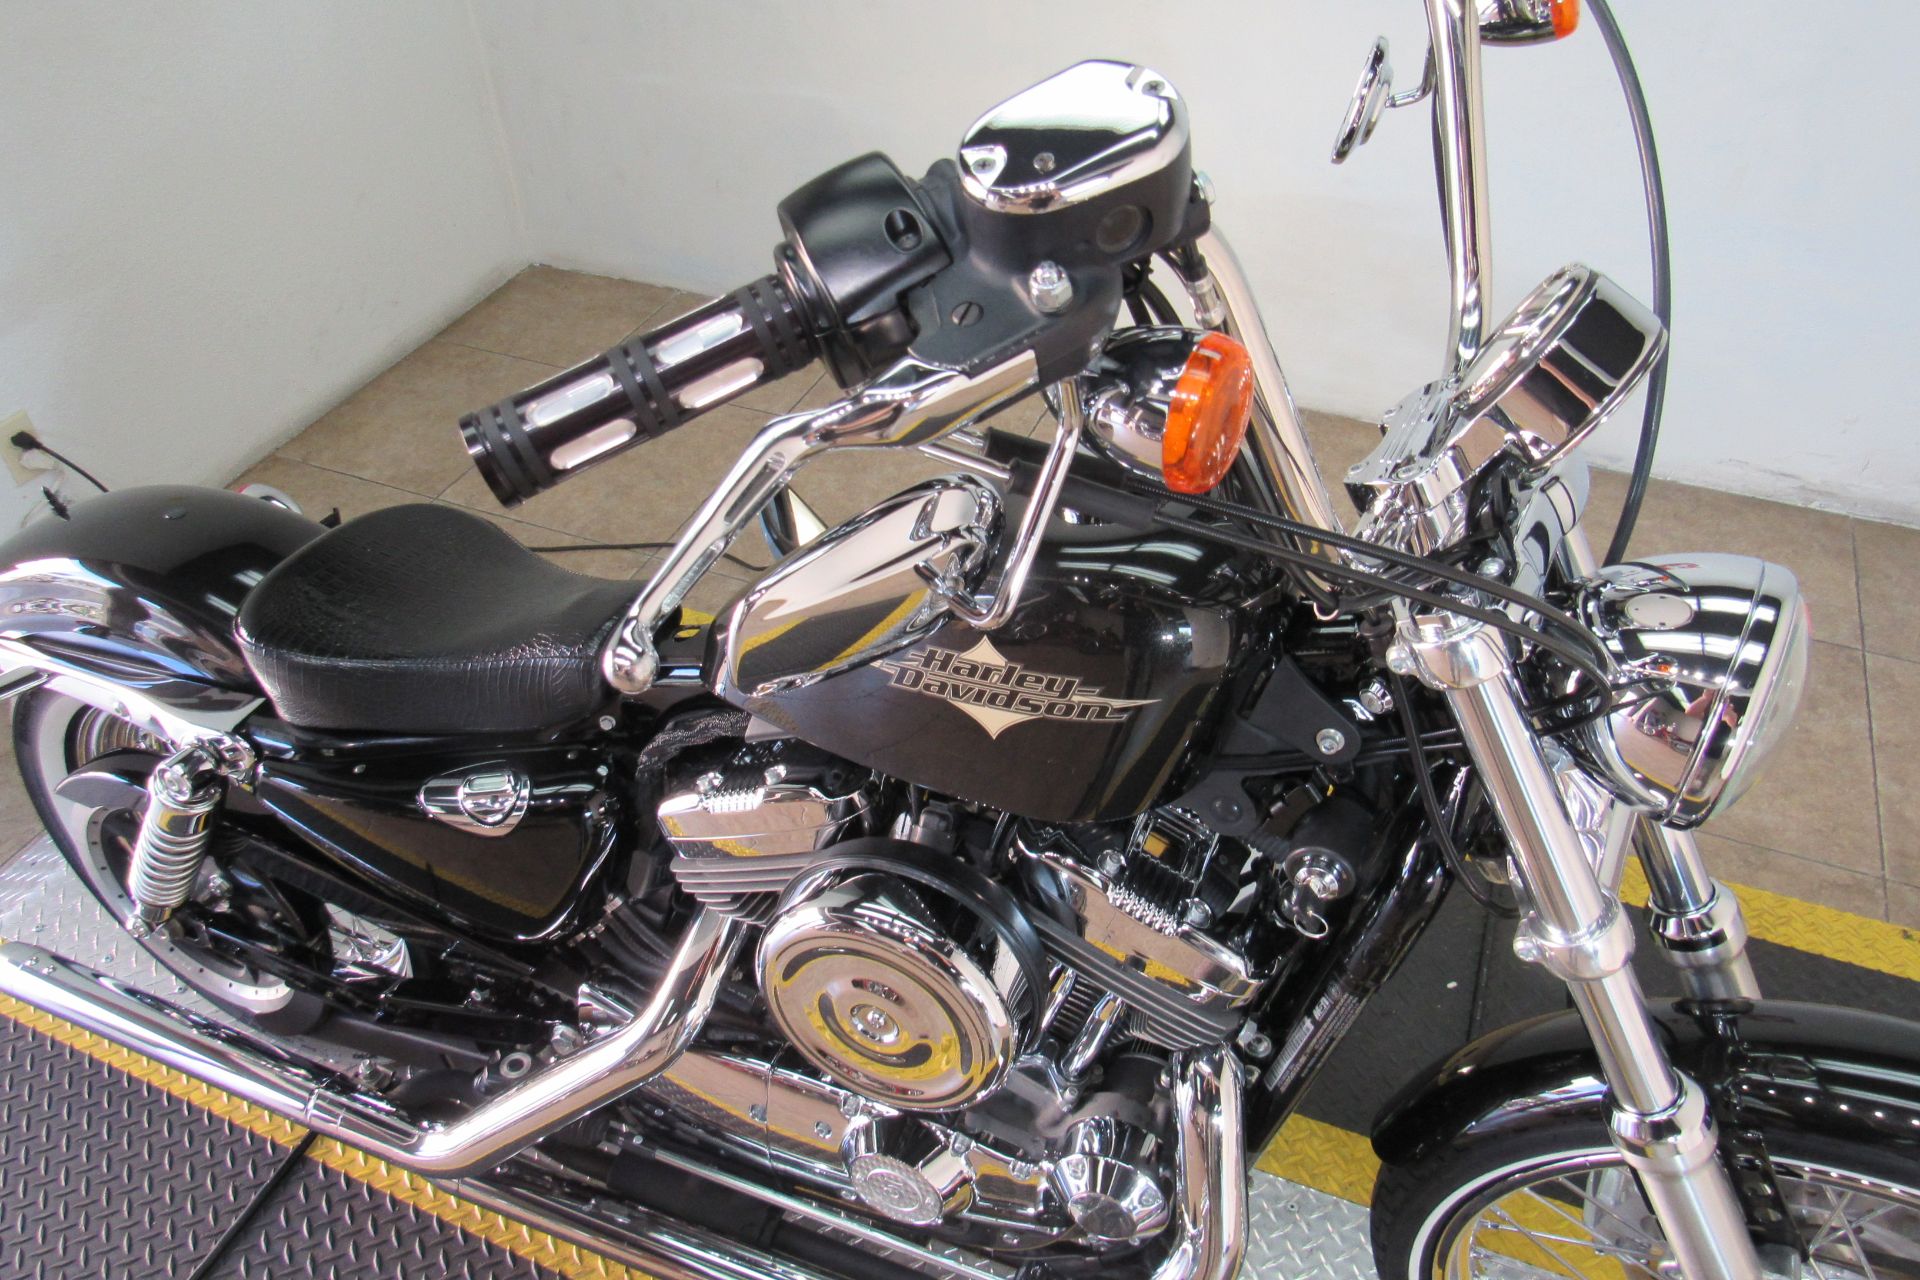 2015 Harley-Davidson Seventy-Two® in Temecula, California - Photo 23